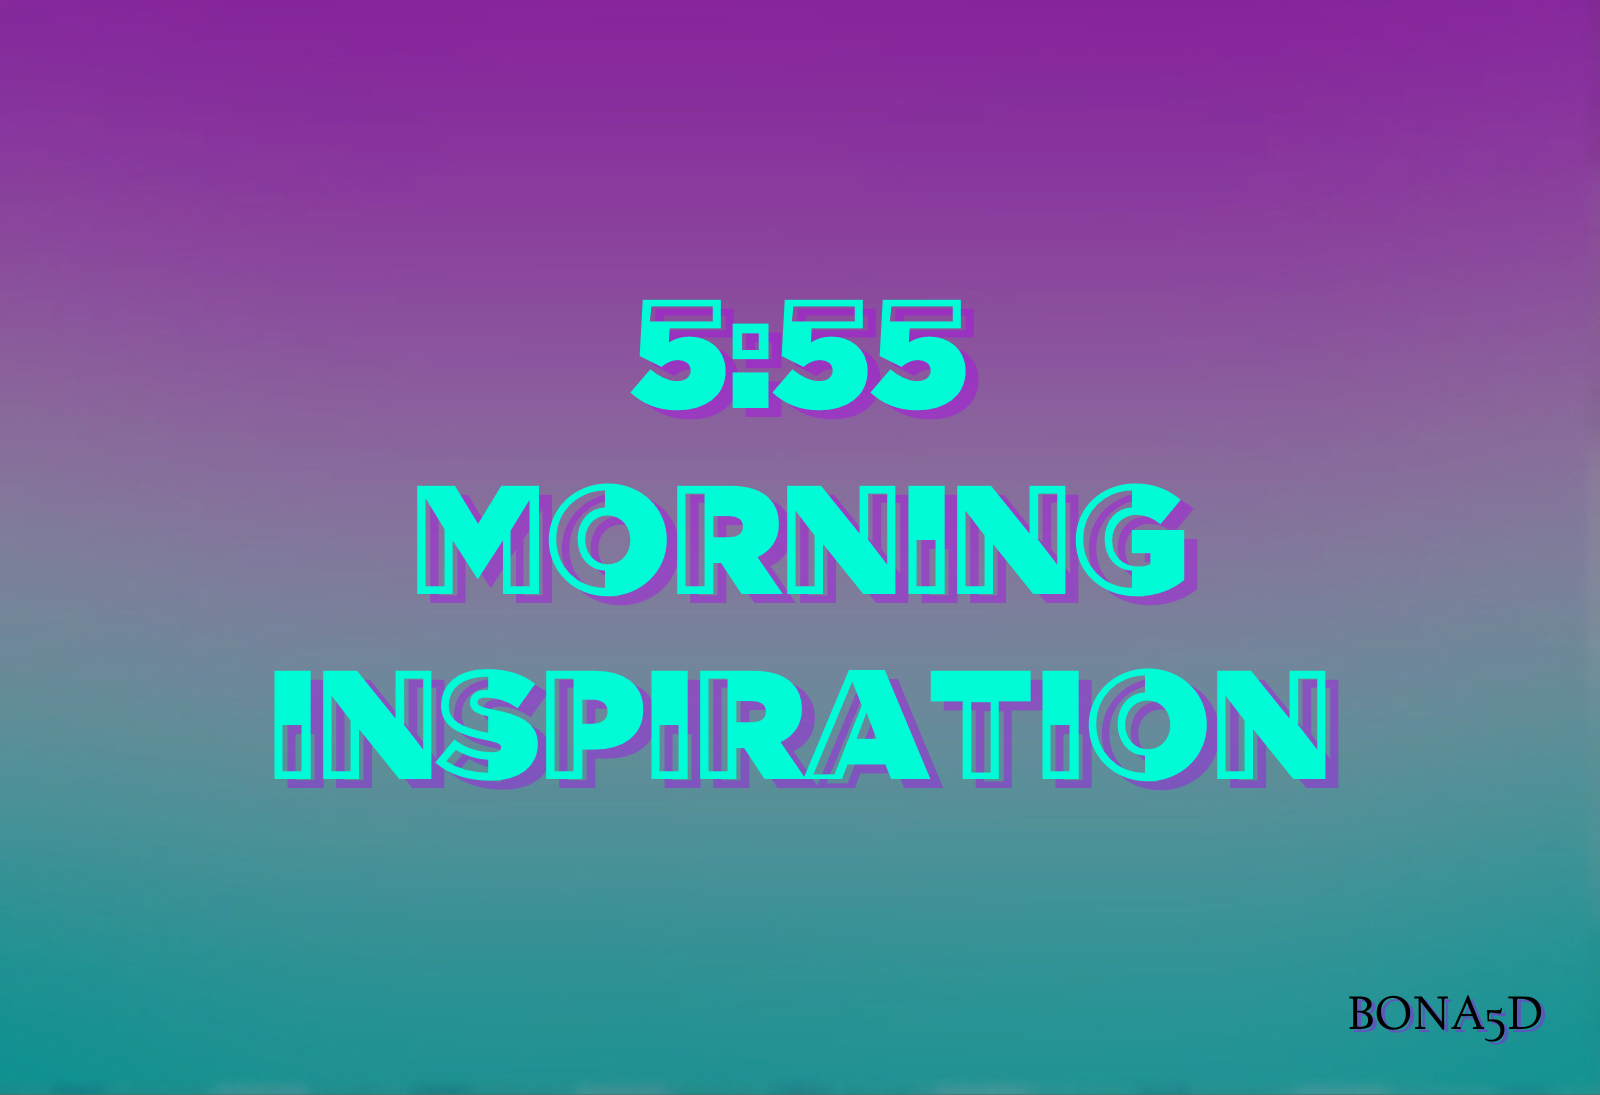 03-10-20 morning inspiration